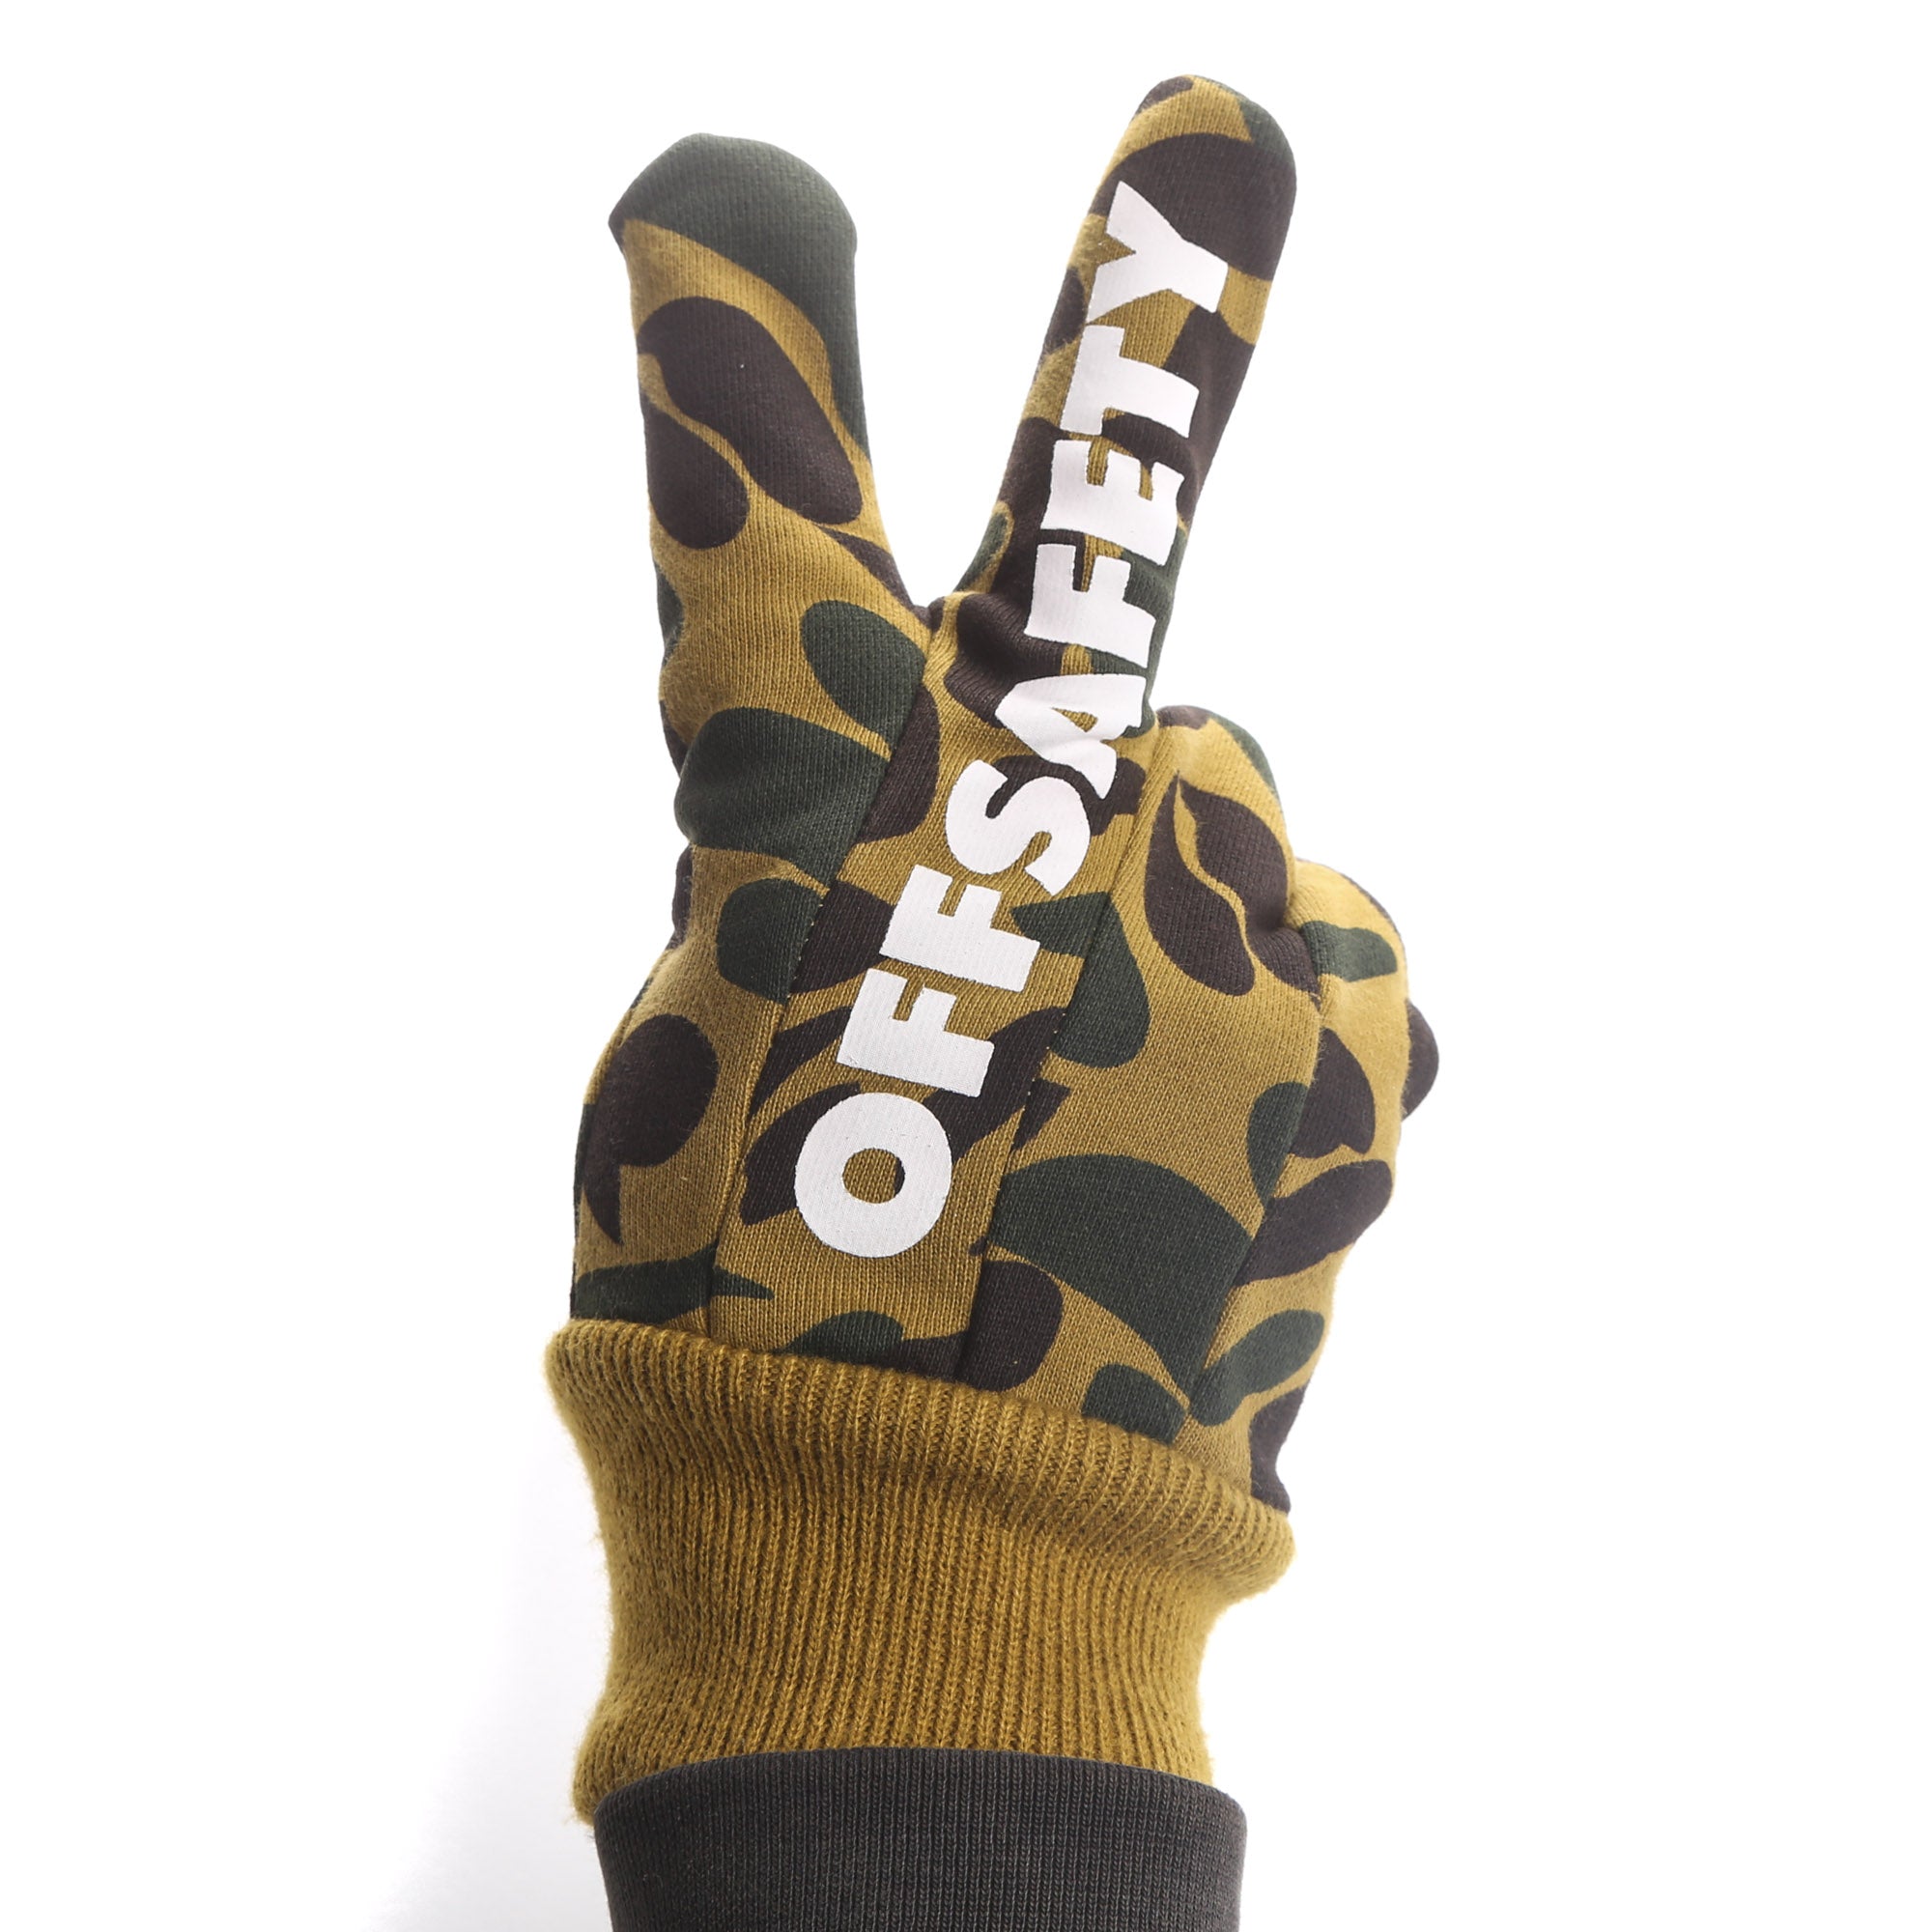 OffSafety Gloves